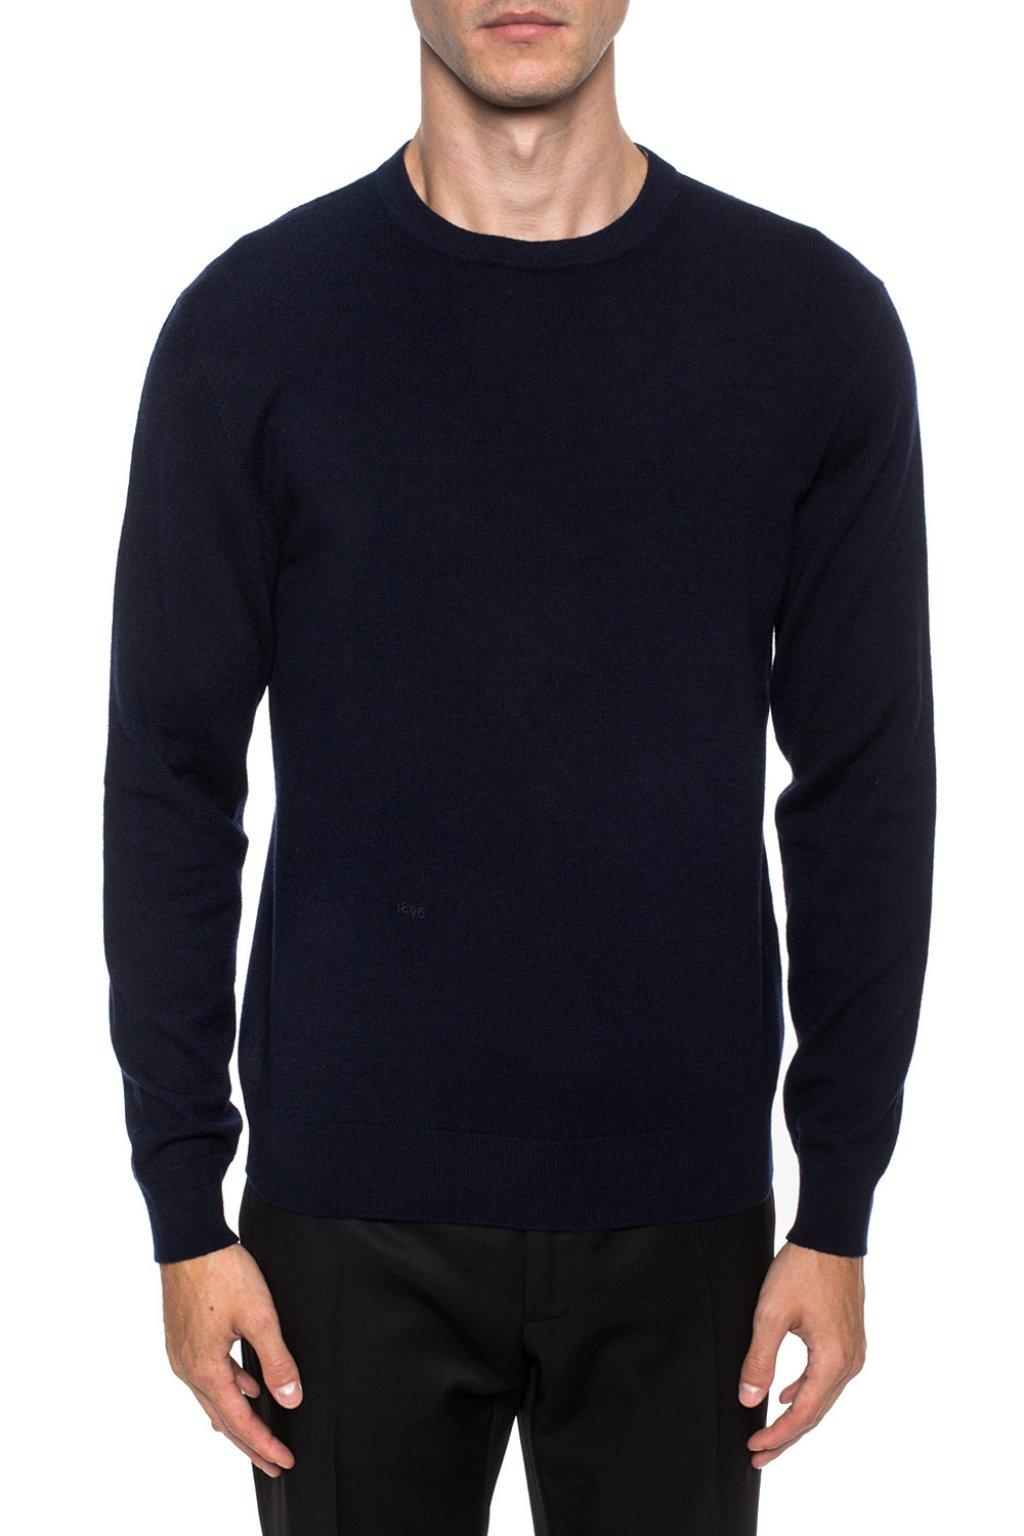 Berluti Cashmere Sweater Navy Blue for Men - Lyst